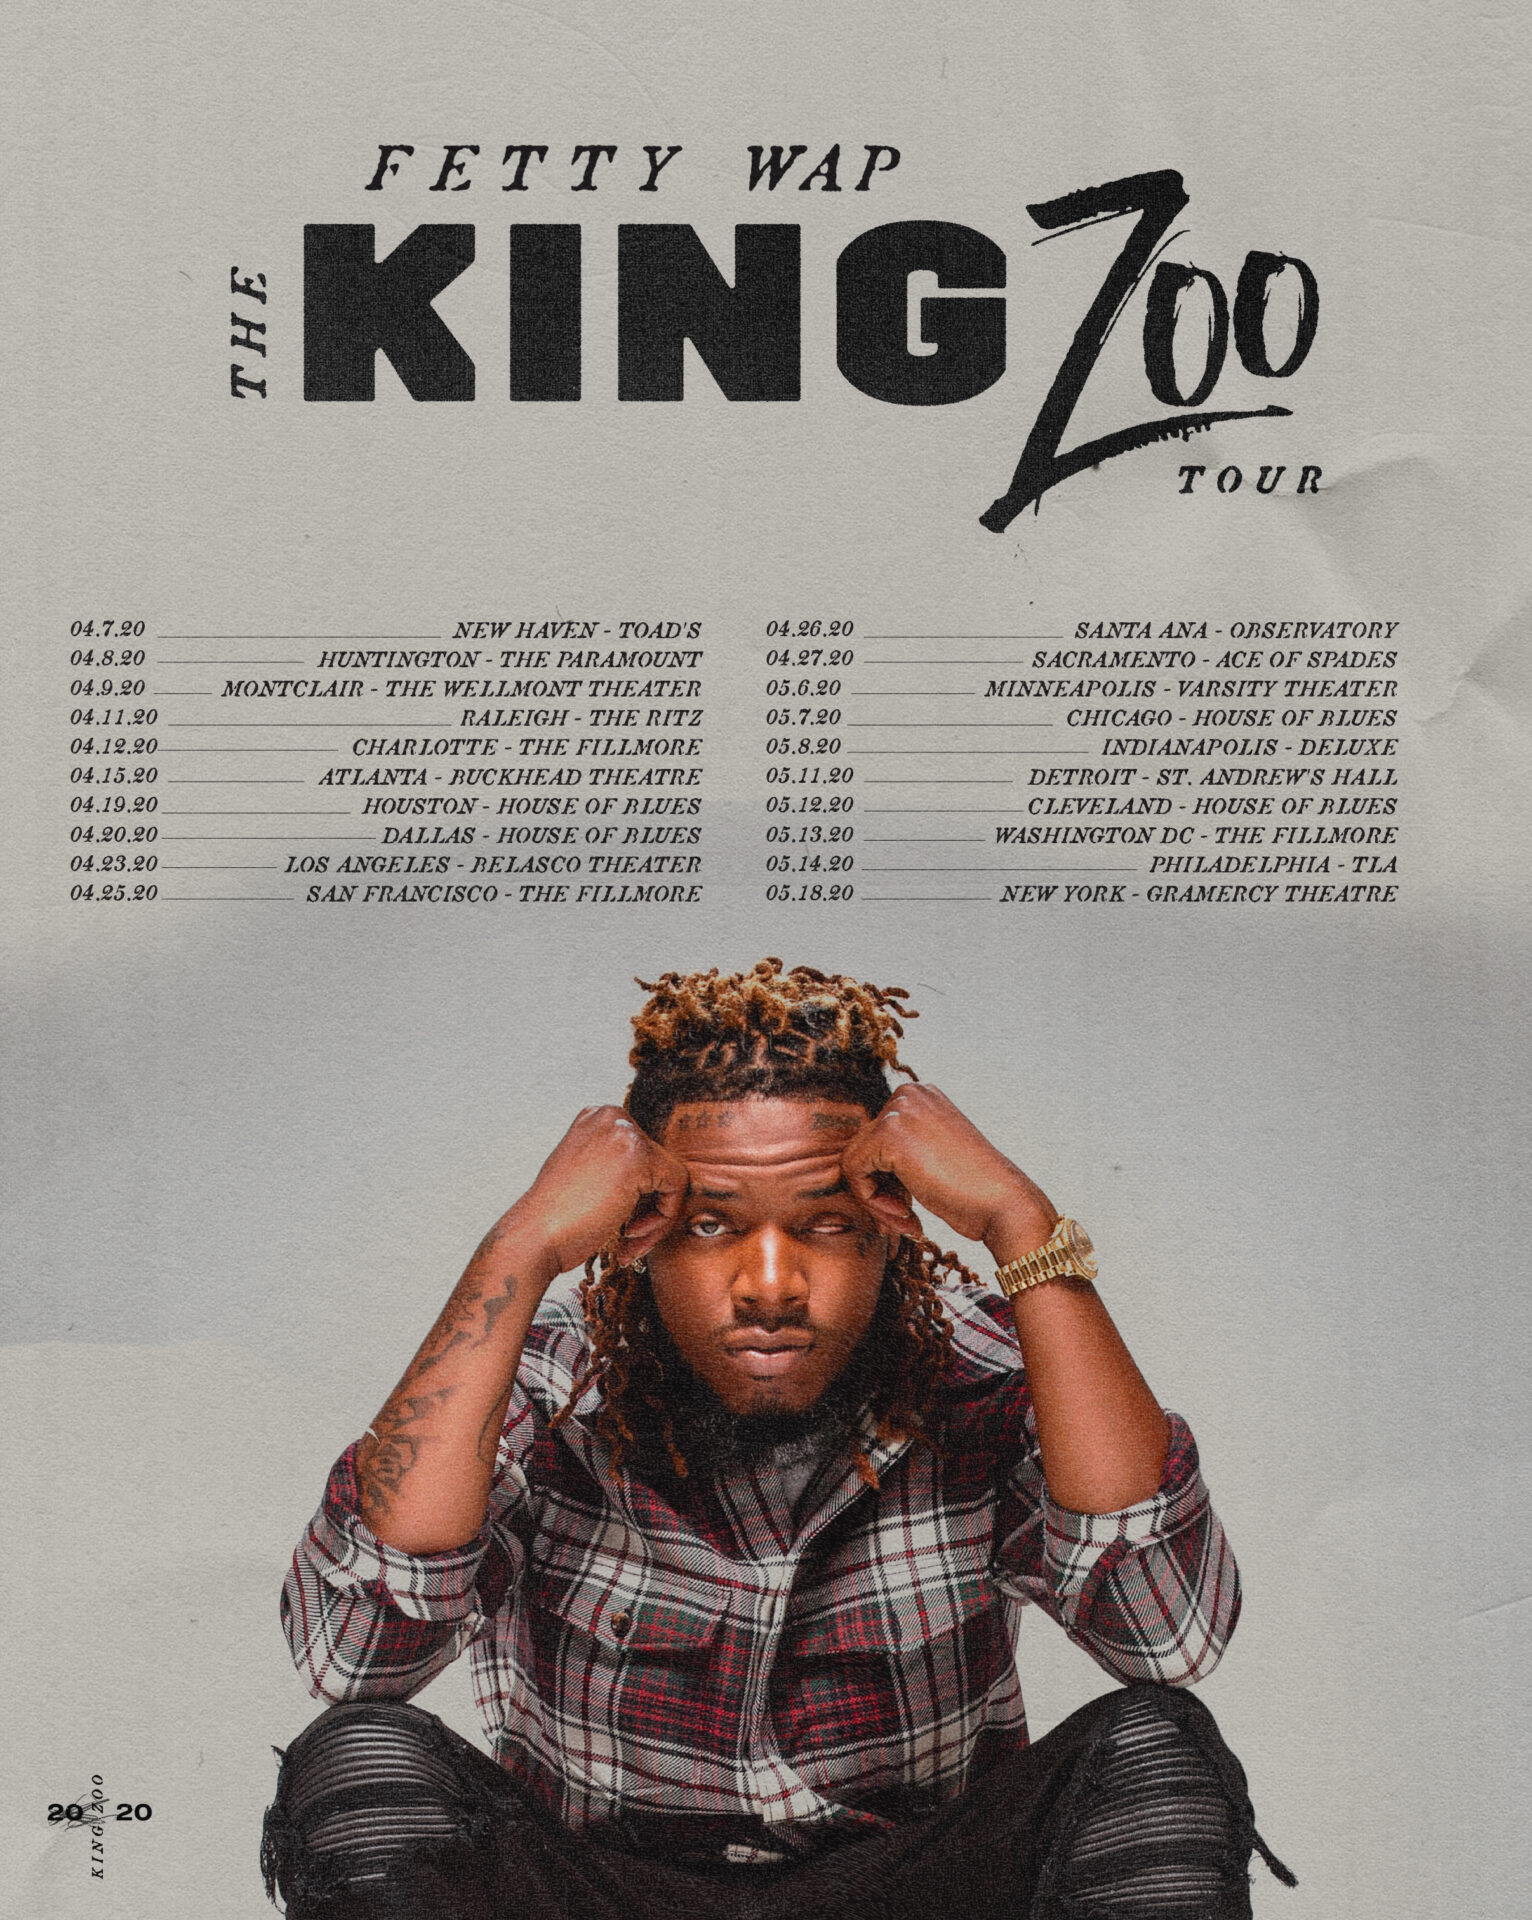 Fetty Wap announces “The King Zoo” US Tour